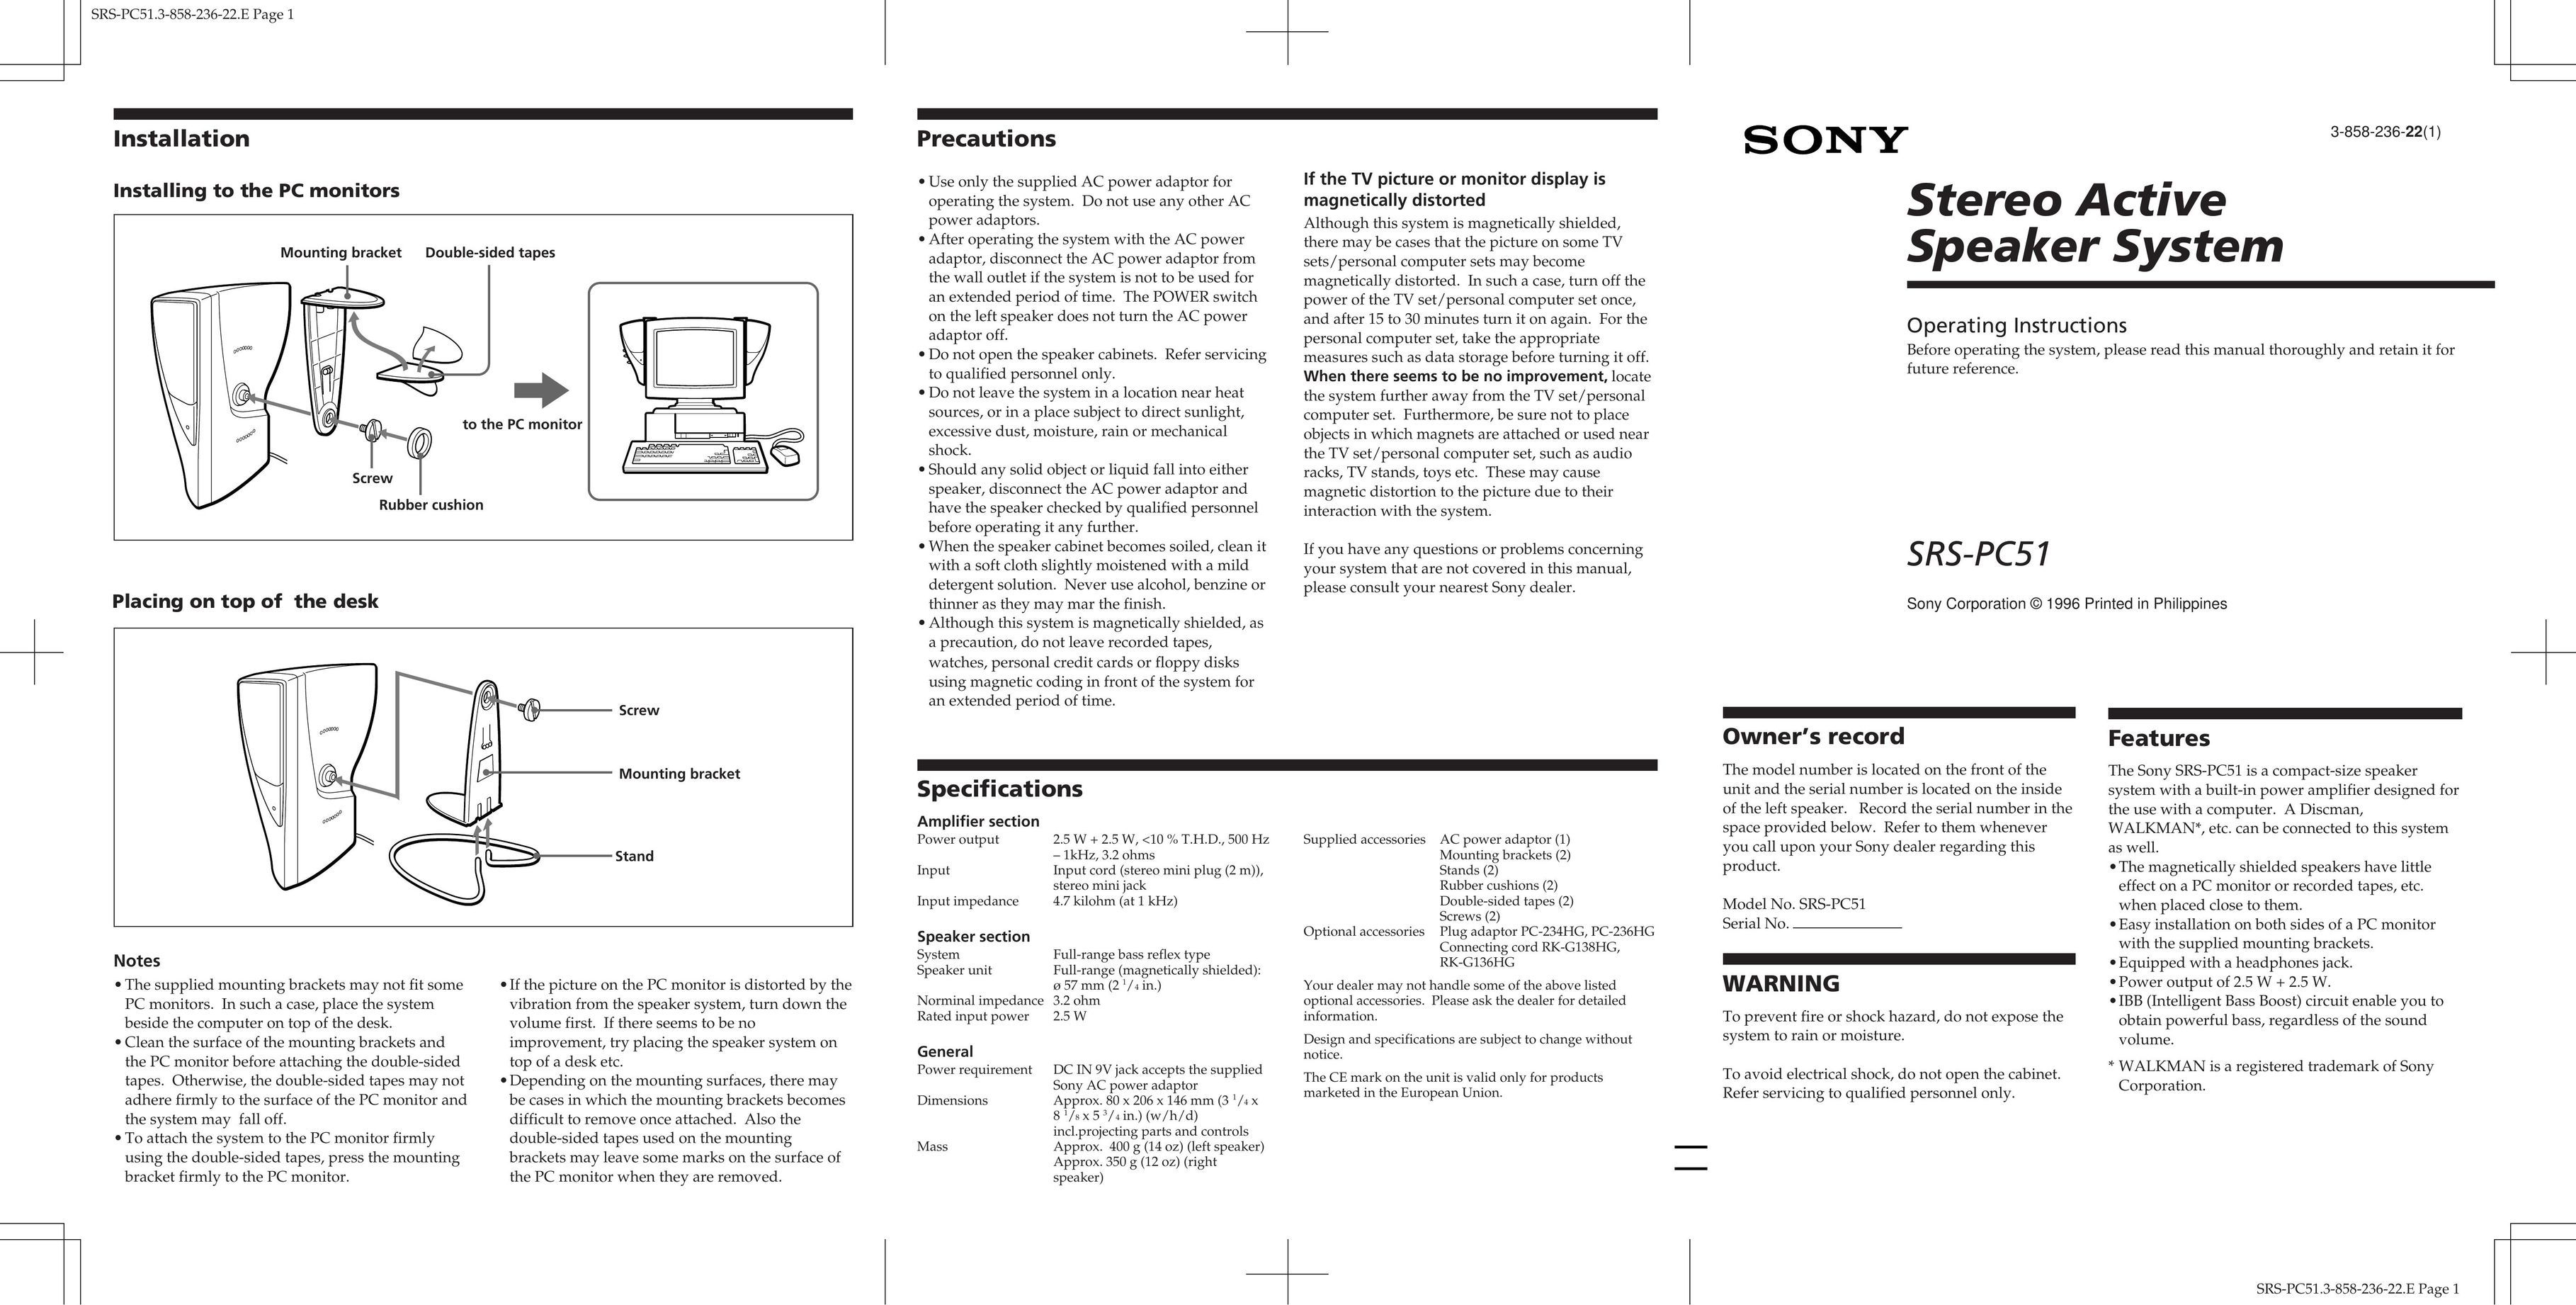 Sony SRS-PC51 Portable Speaker User Manual